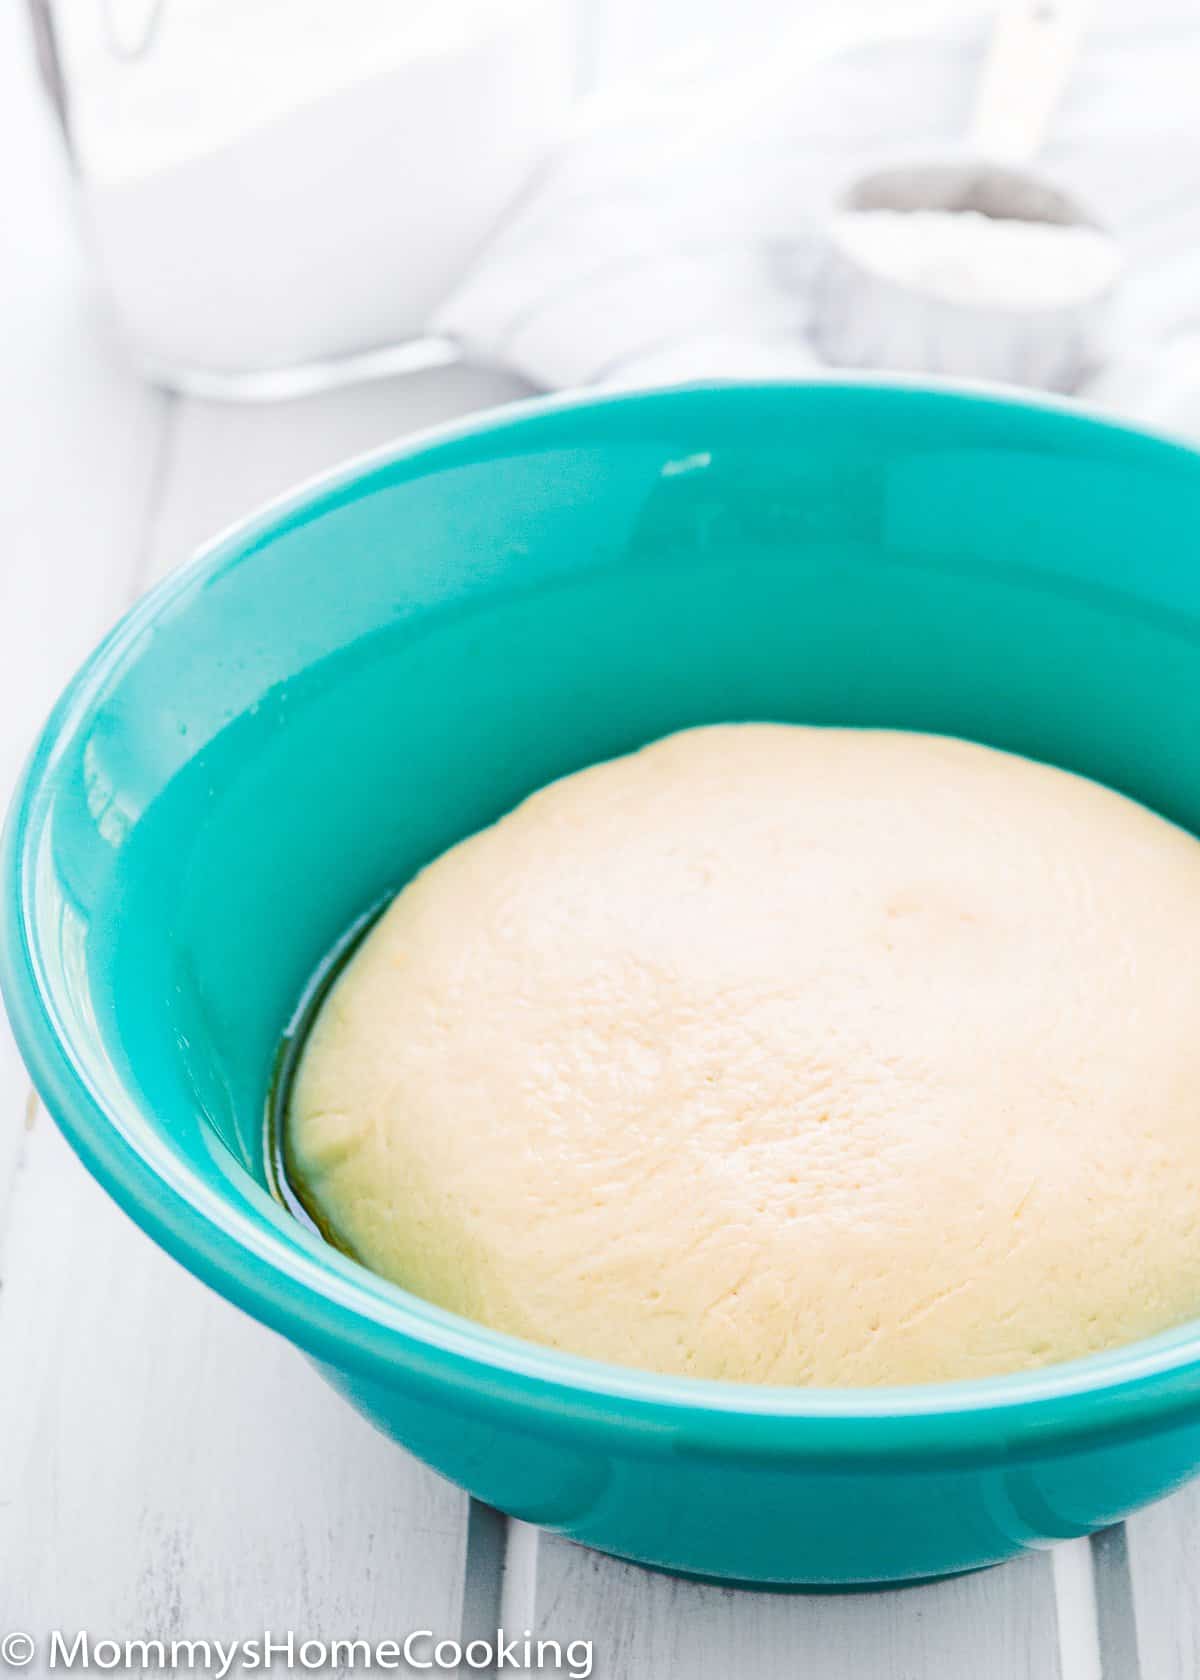 risen homemade pizza dough in a blue bowl